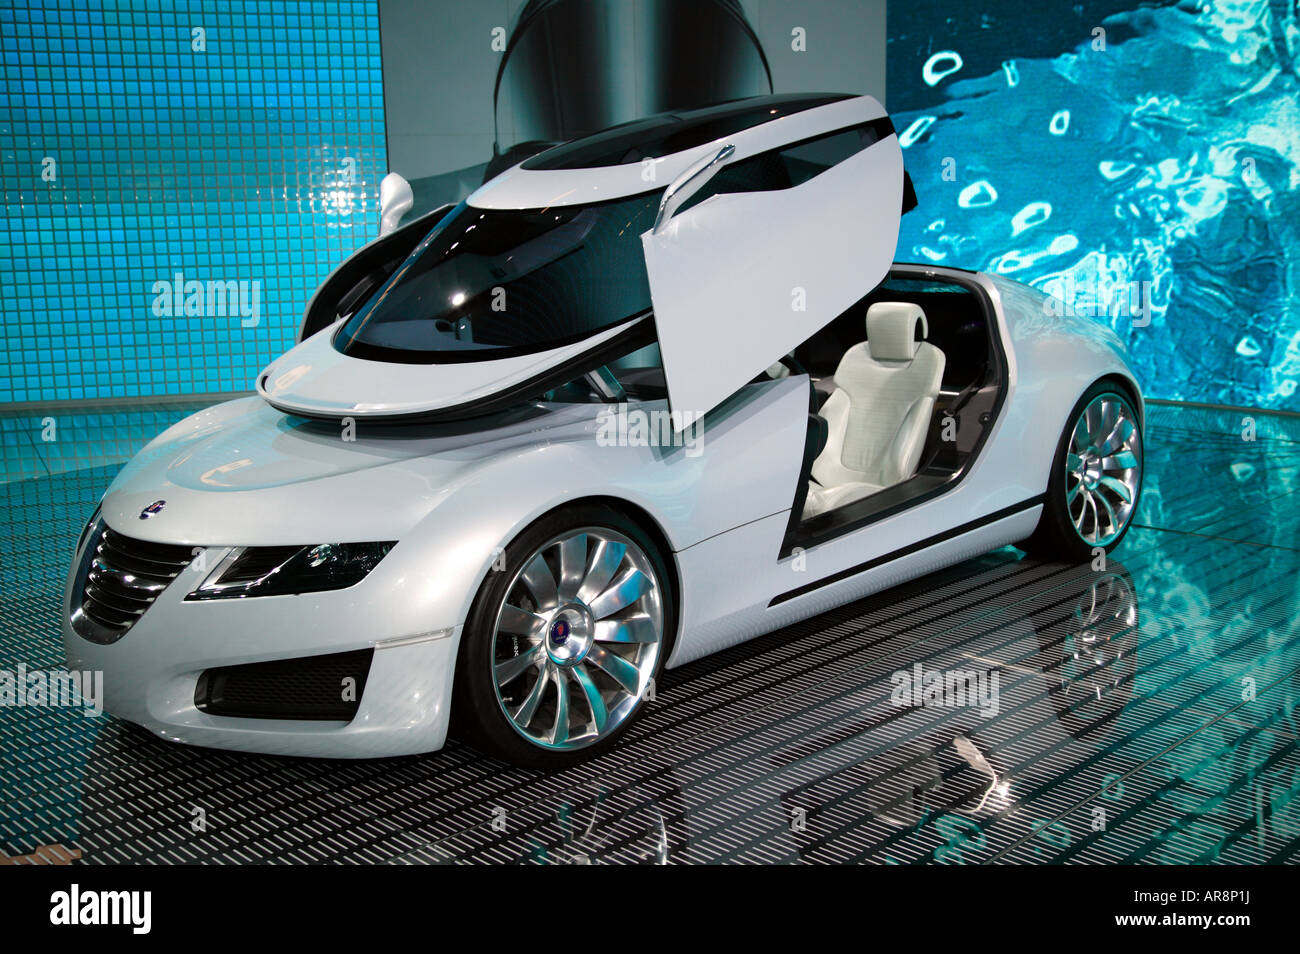 Saab Aero X Concept Car Stock Photo